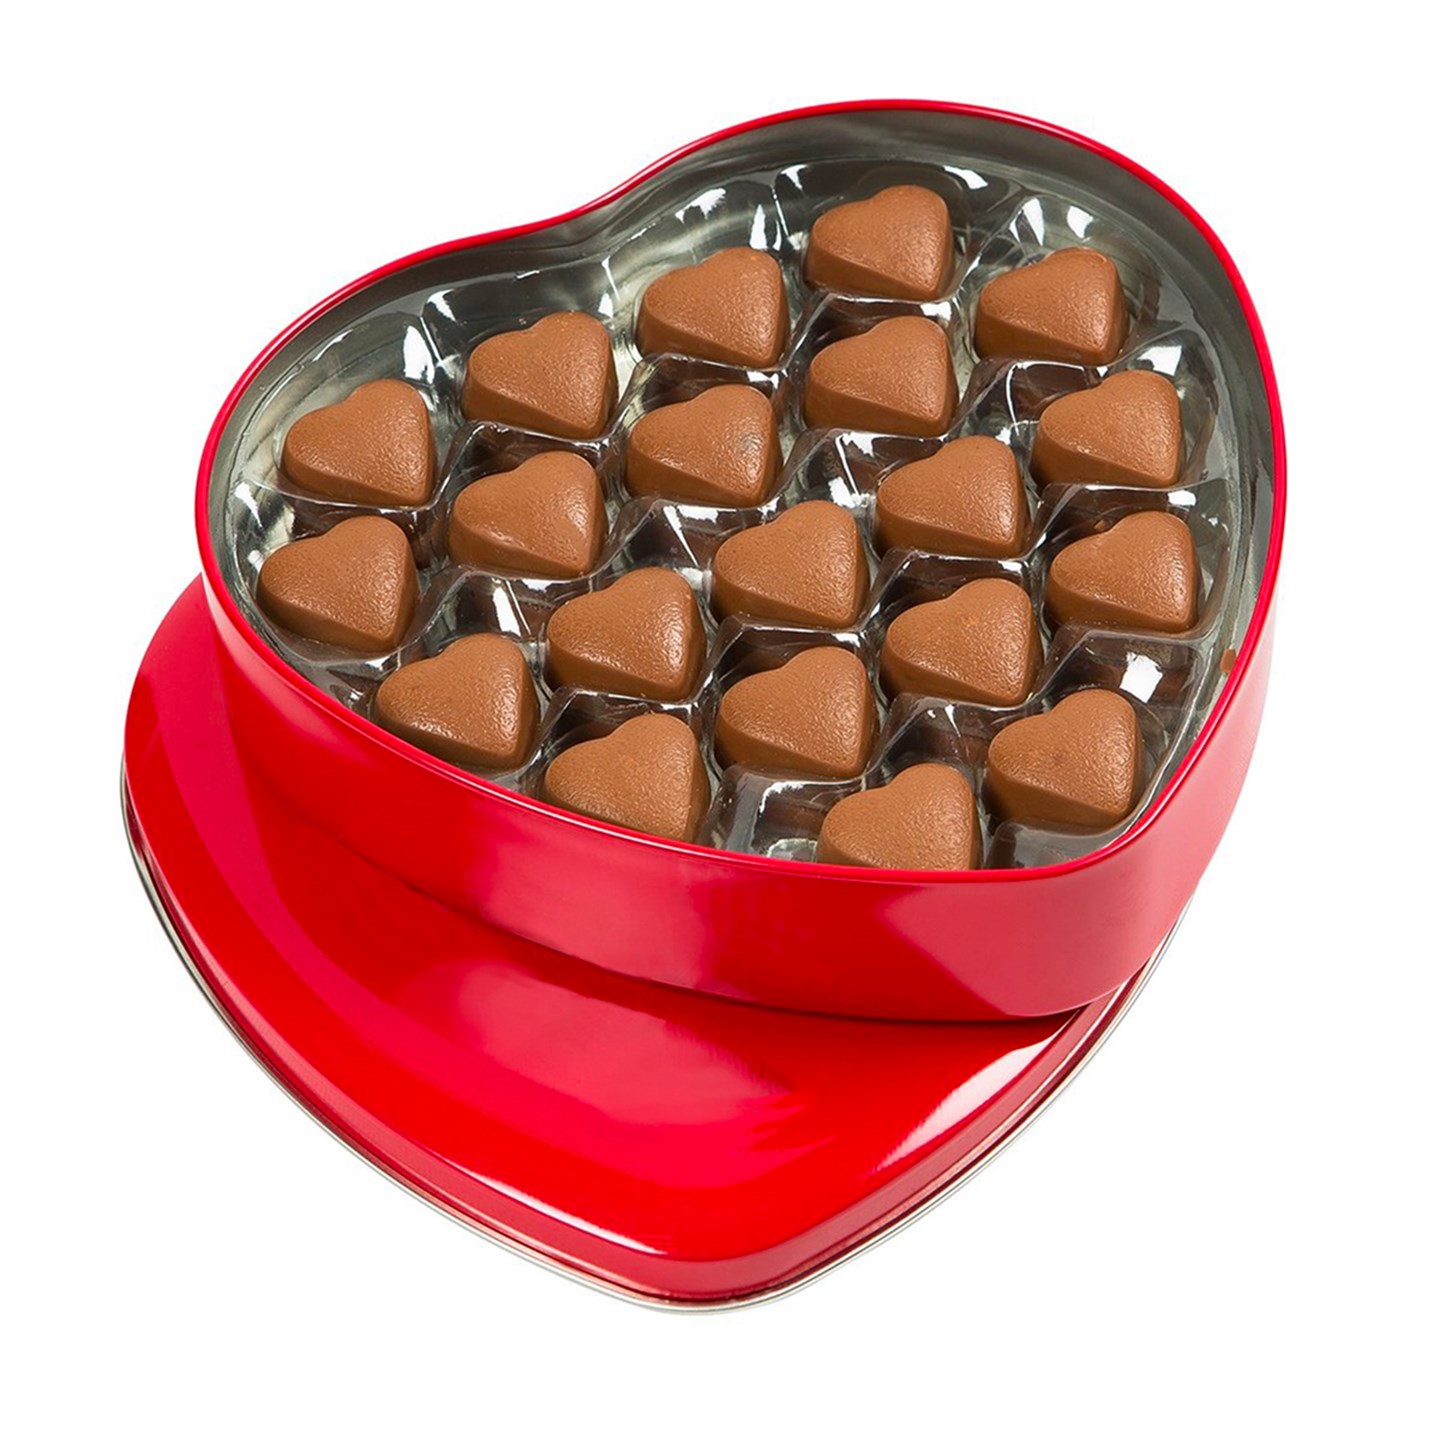 Kalp Çikolata Kırmızı Metal Kutu 400g(e) - Melodi Çikolata